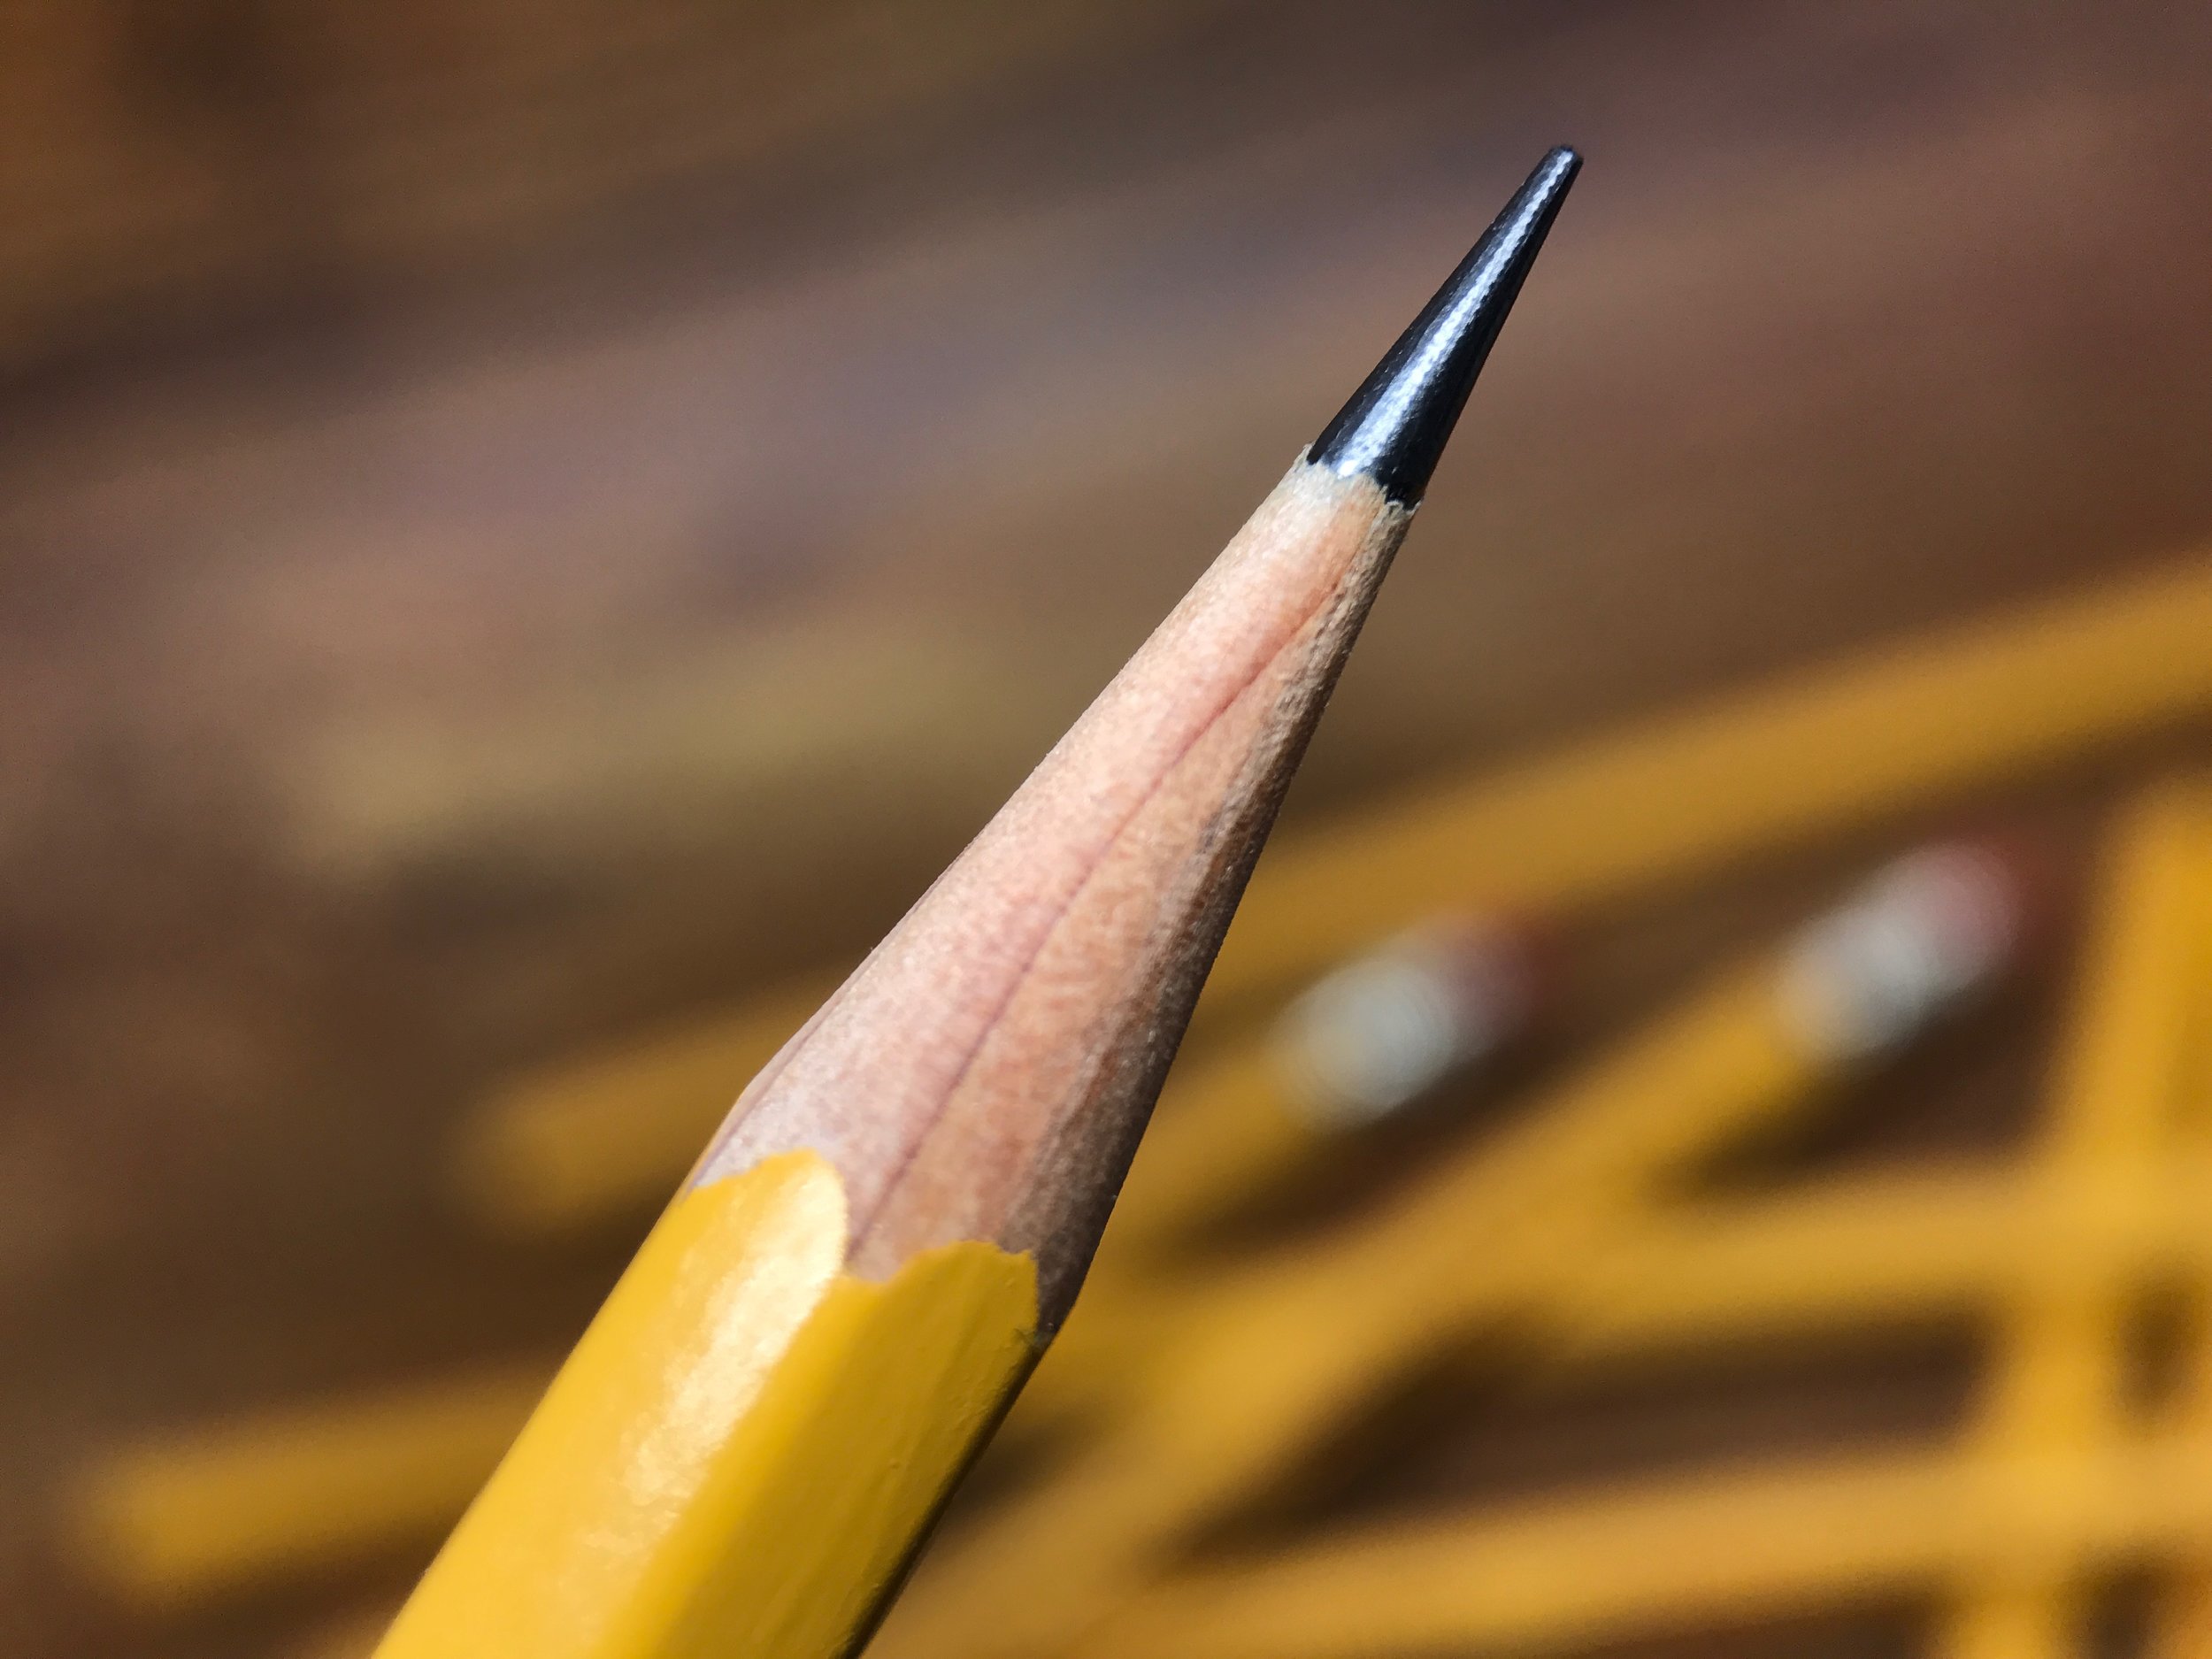 Details about   48 PERSONALIZED Regular Pencils Cedar Look Pencils 